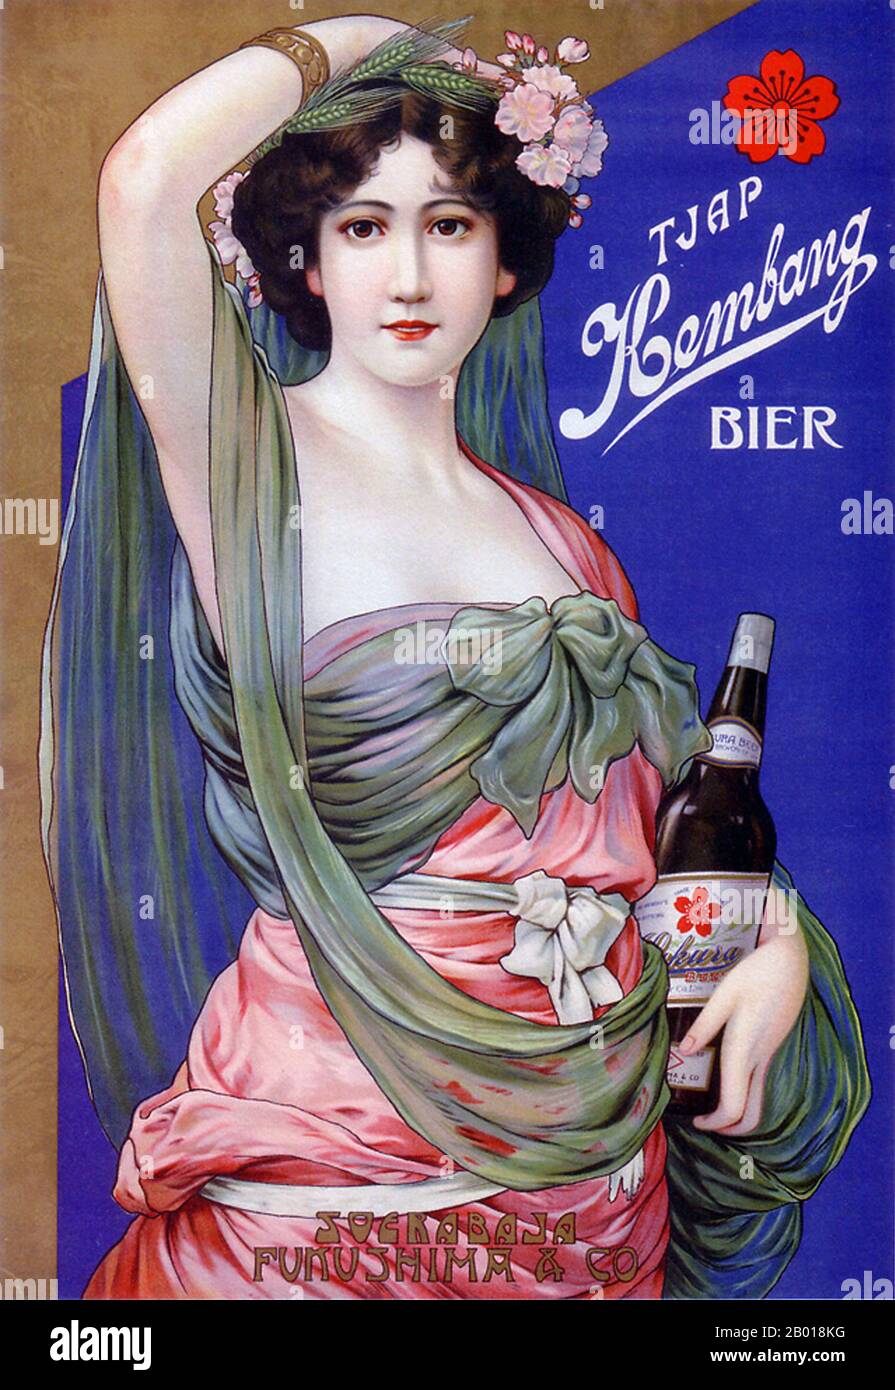 Japan: Advertising poster for Kembang (Sakura Export) Beer, c. 1912-1916.  A European woman advertises Kembang (Sakura export) beer apparently aimed at a European (or expatriate) market - perhaps a Dutch joint enterprise based in the Dutch East Indies (Surabaya, Indonesia). Stock Photo